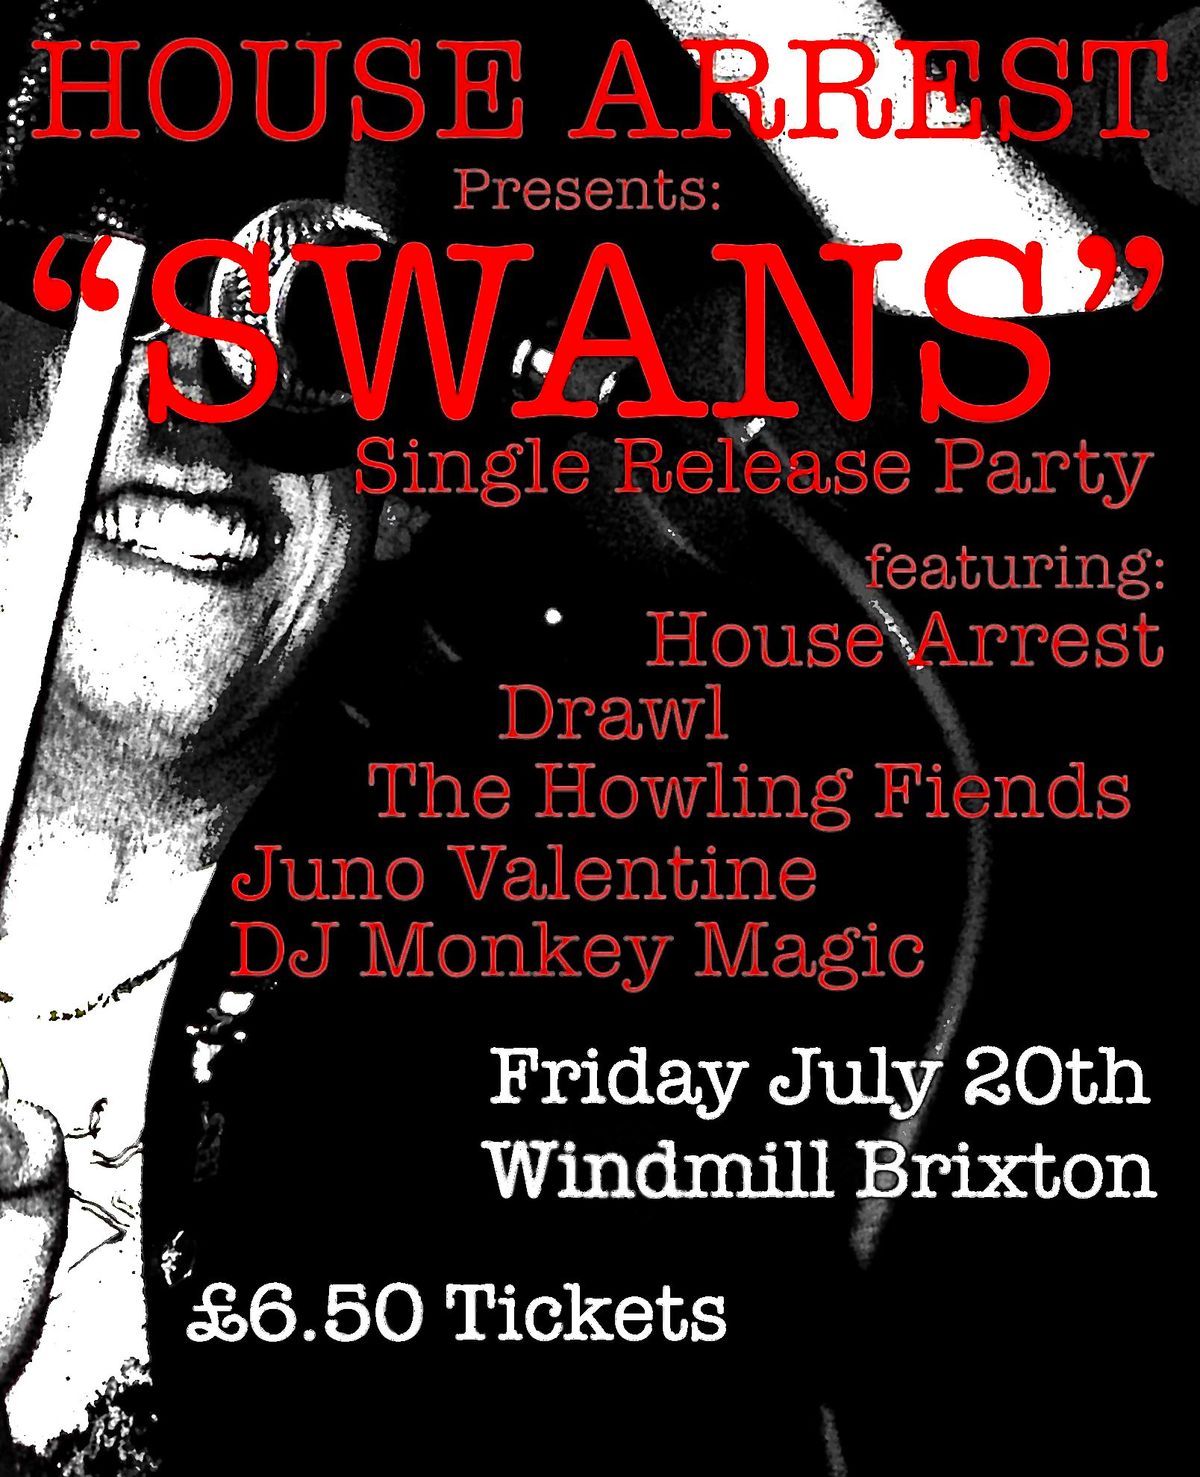 House Arrest - 'Swans' single release party